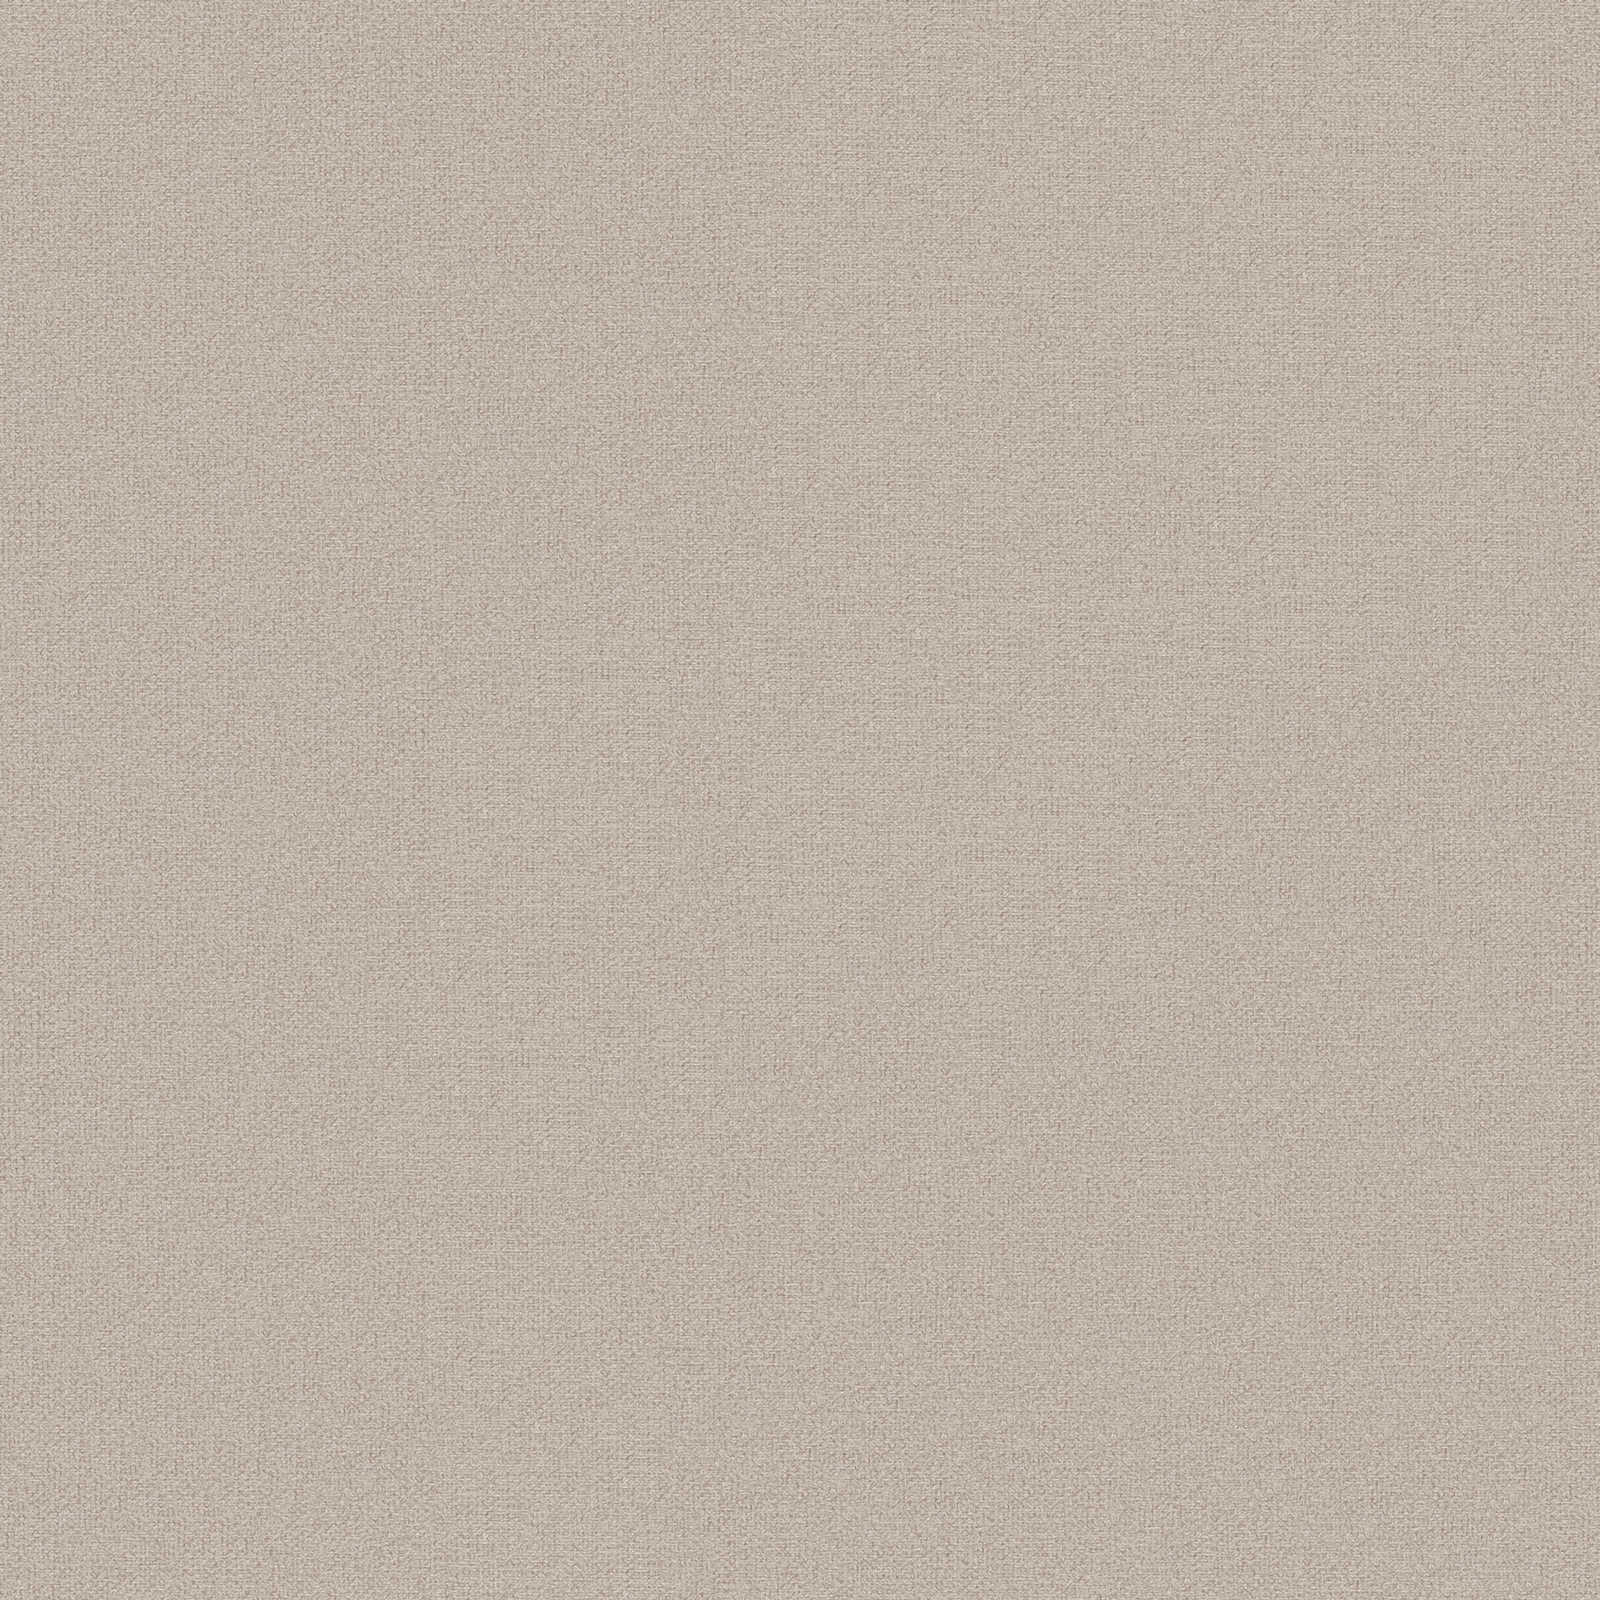 Plain wallpaper with linen look PVC-free - brown, beige
